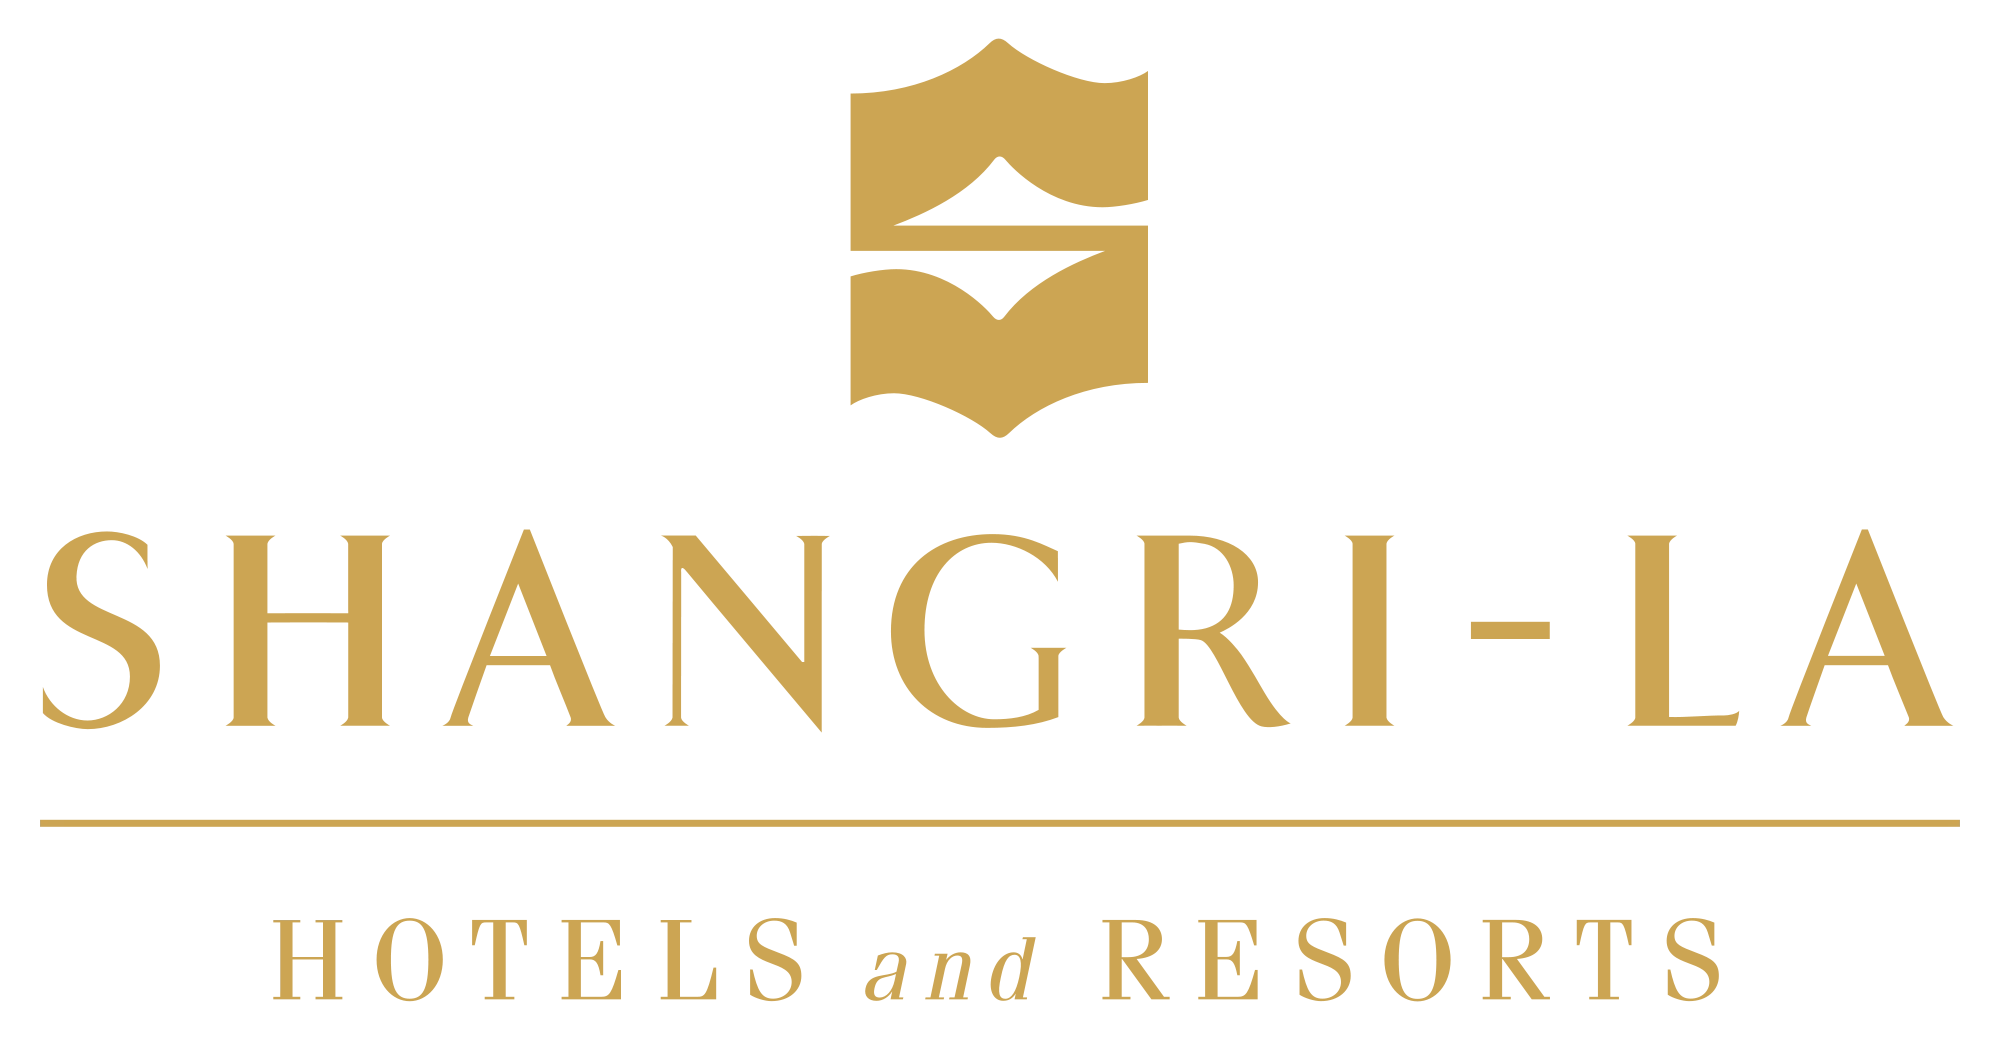 Official Logo of Shangri La Hotels & Resorts